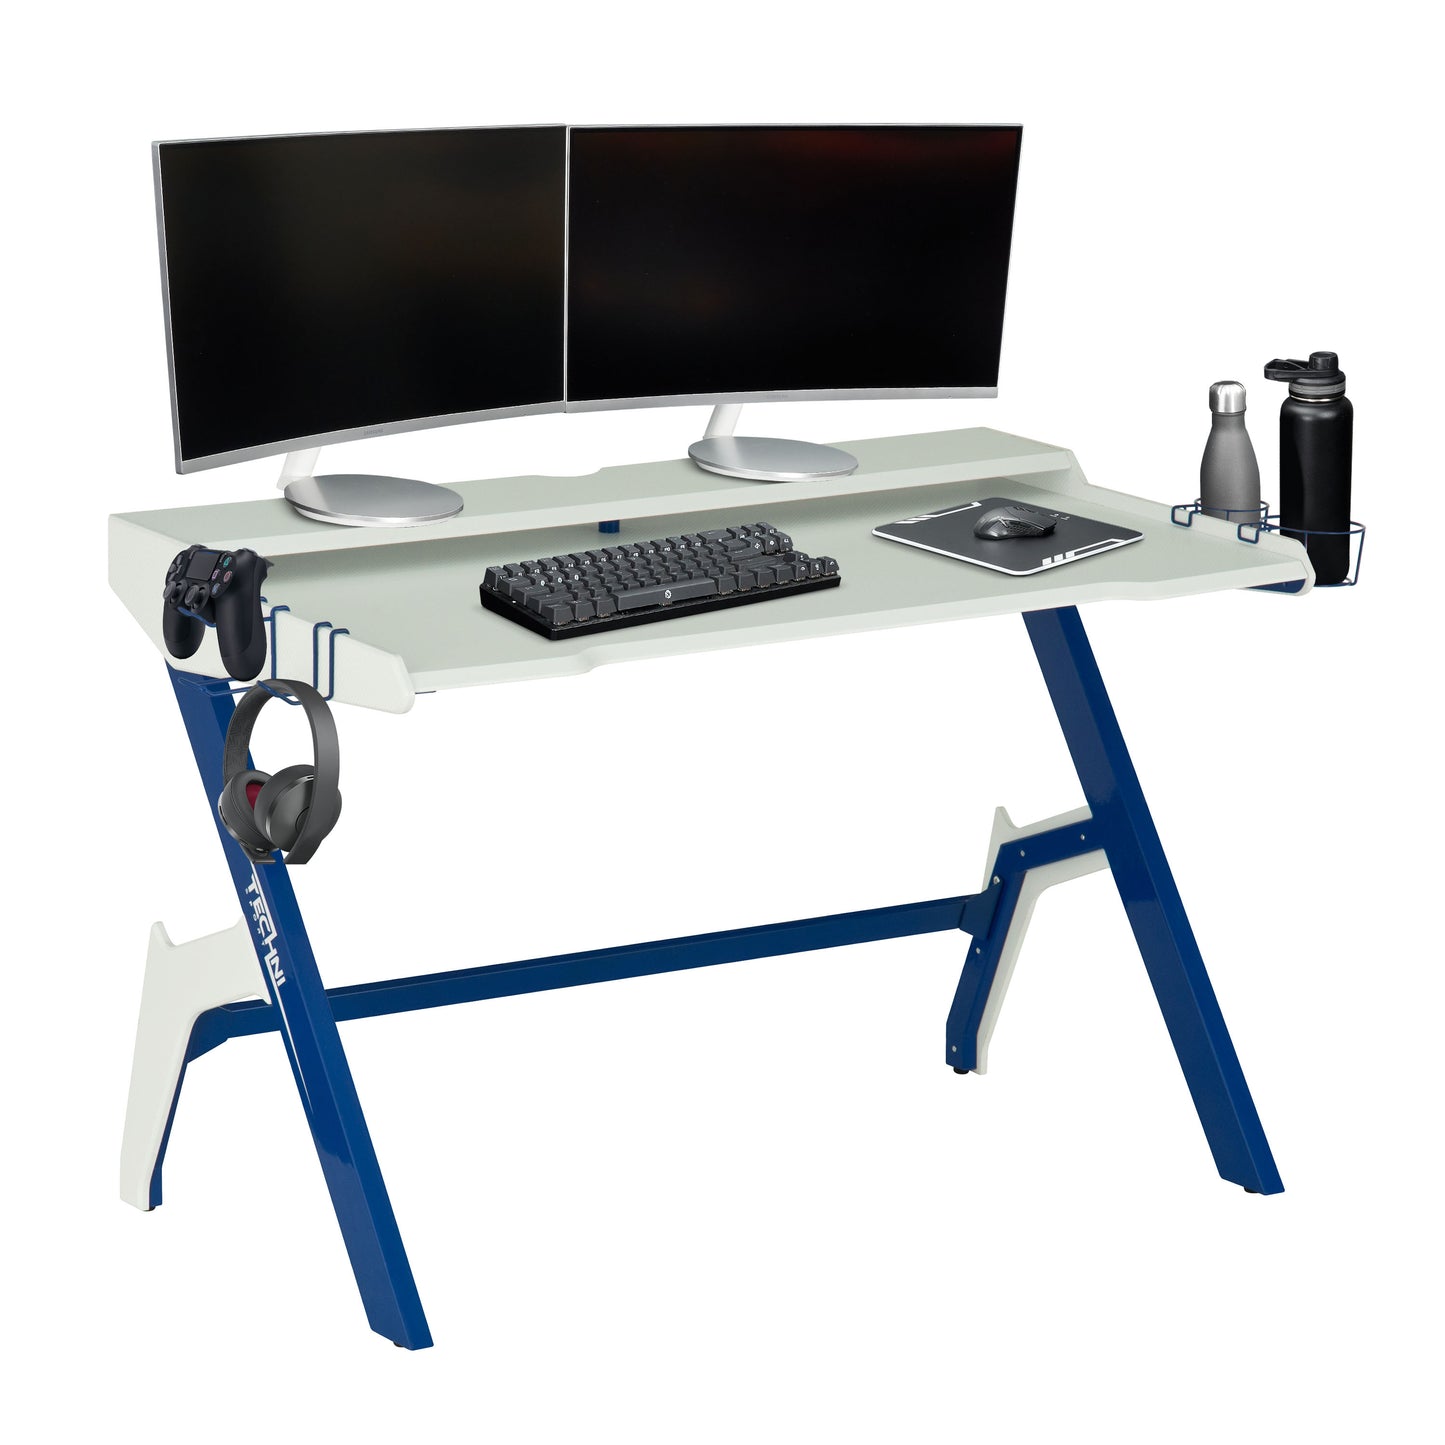 Techni Sport Ergonomic Computer Gaming  Desk Workstation with Cupholder  Headphone Hook, Blue